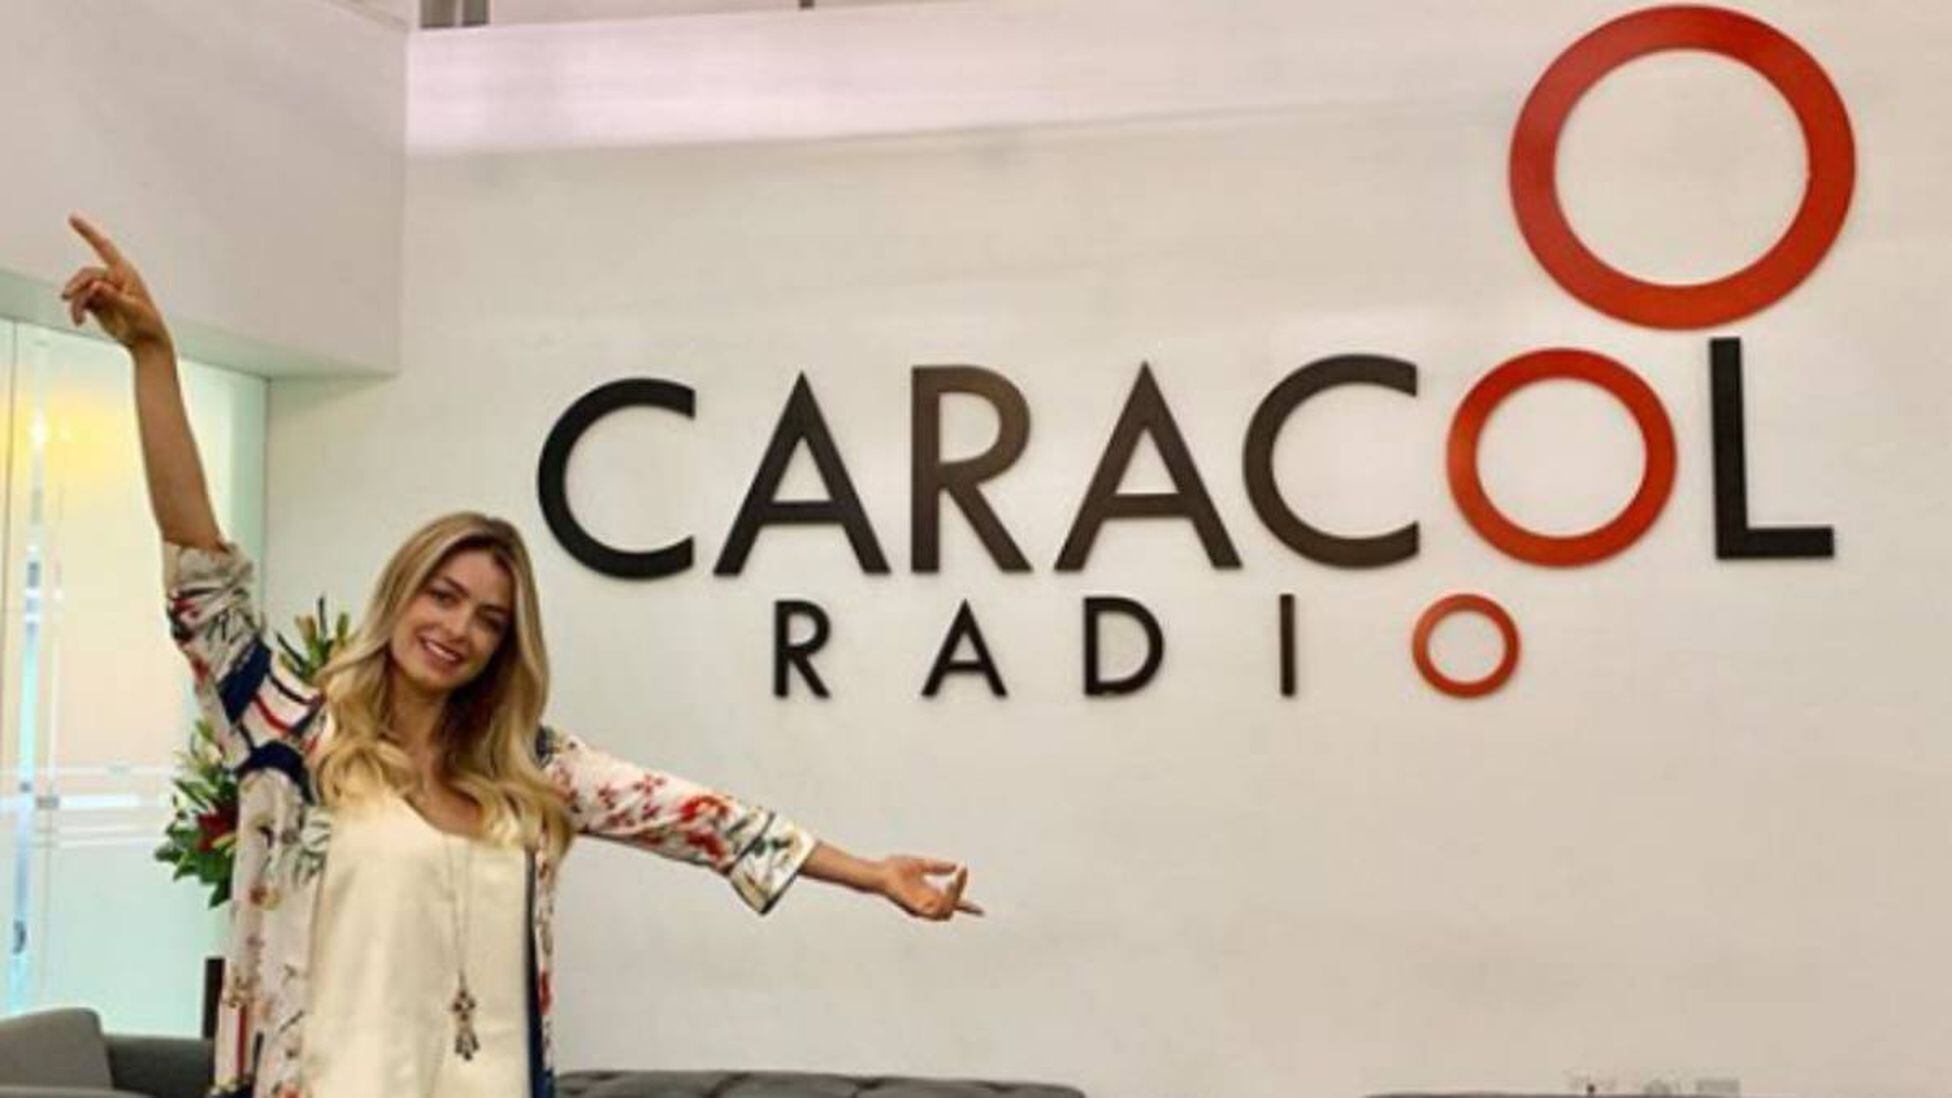 Motel meditación torpe Cristina Hurtado llega a Caracol Radio - Tikitakas